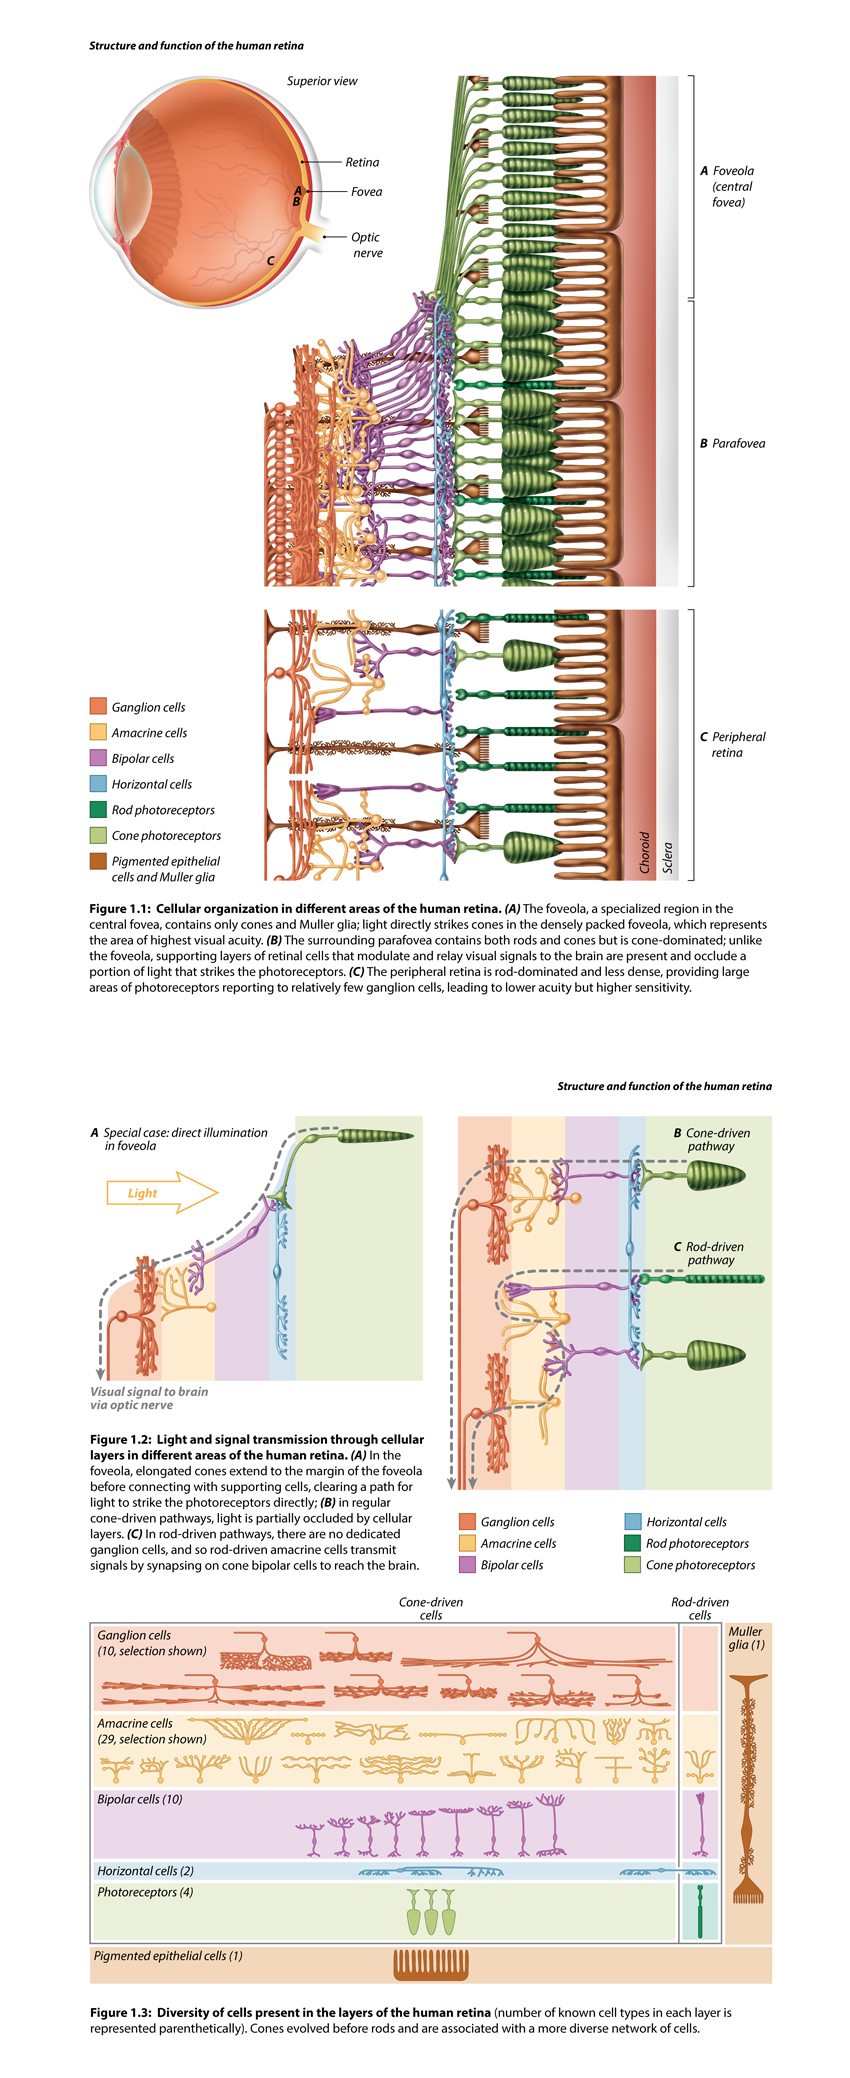 Retinal cell organization